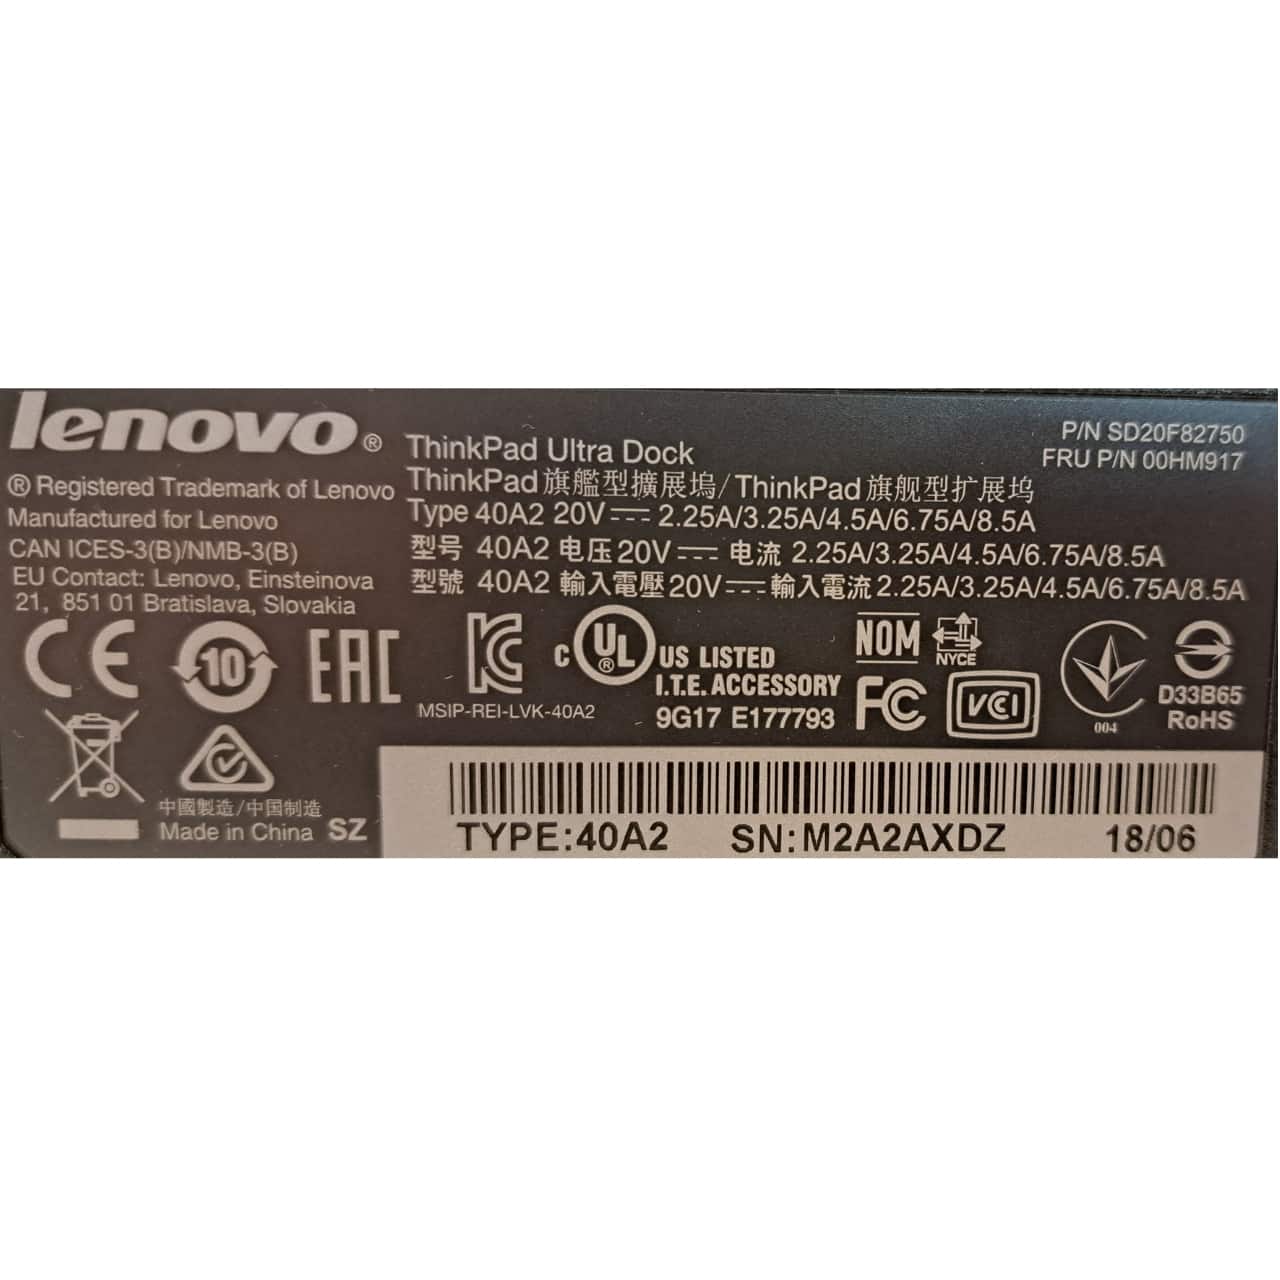 Lenovo ThinkPad Dockingstation 40A2 - Gebraucht - Sehr gut